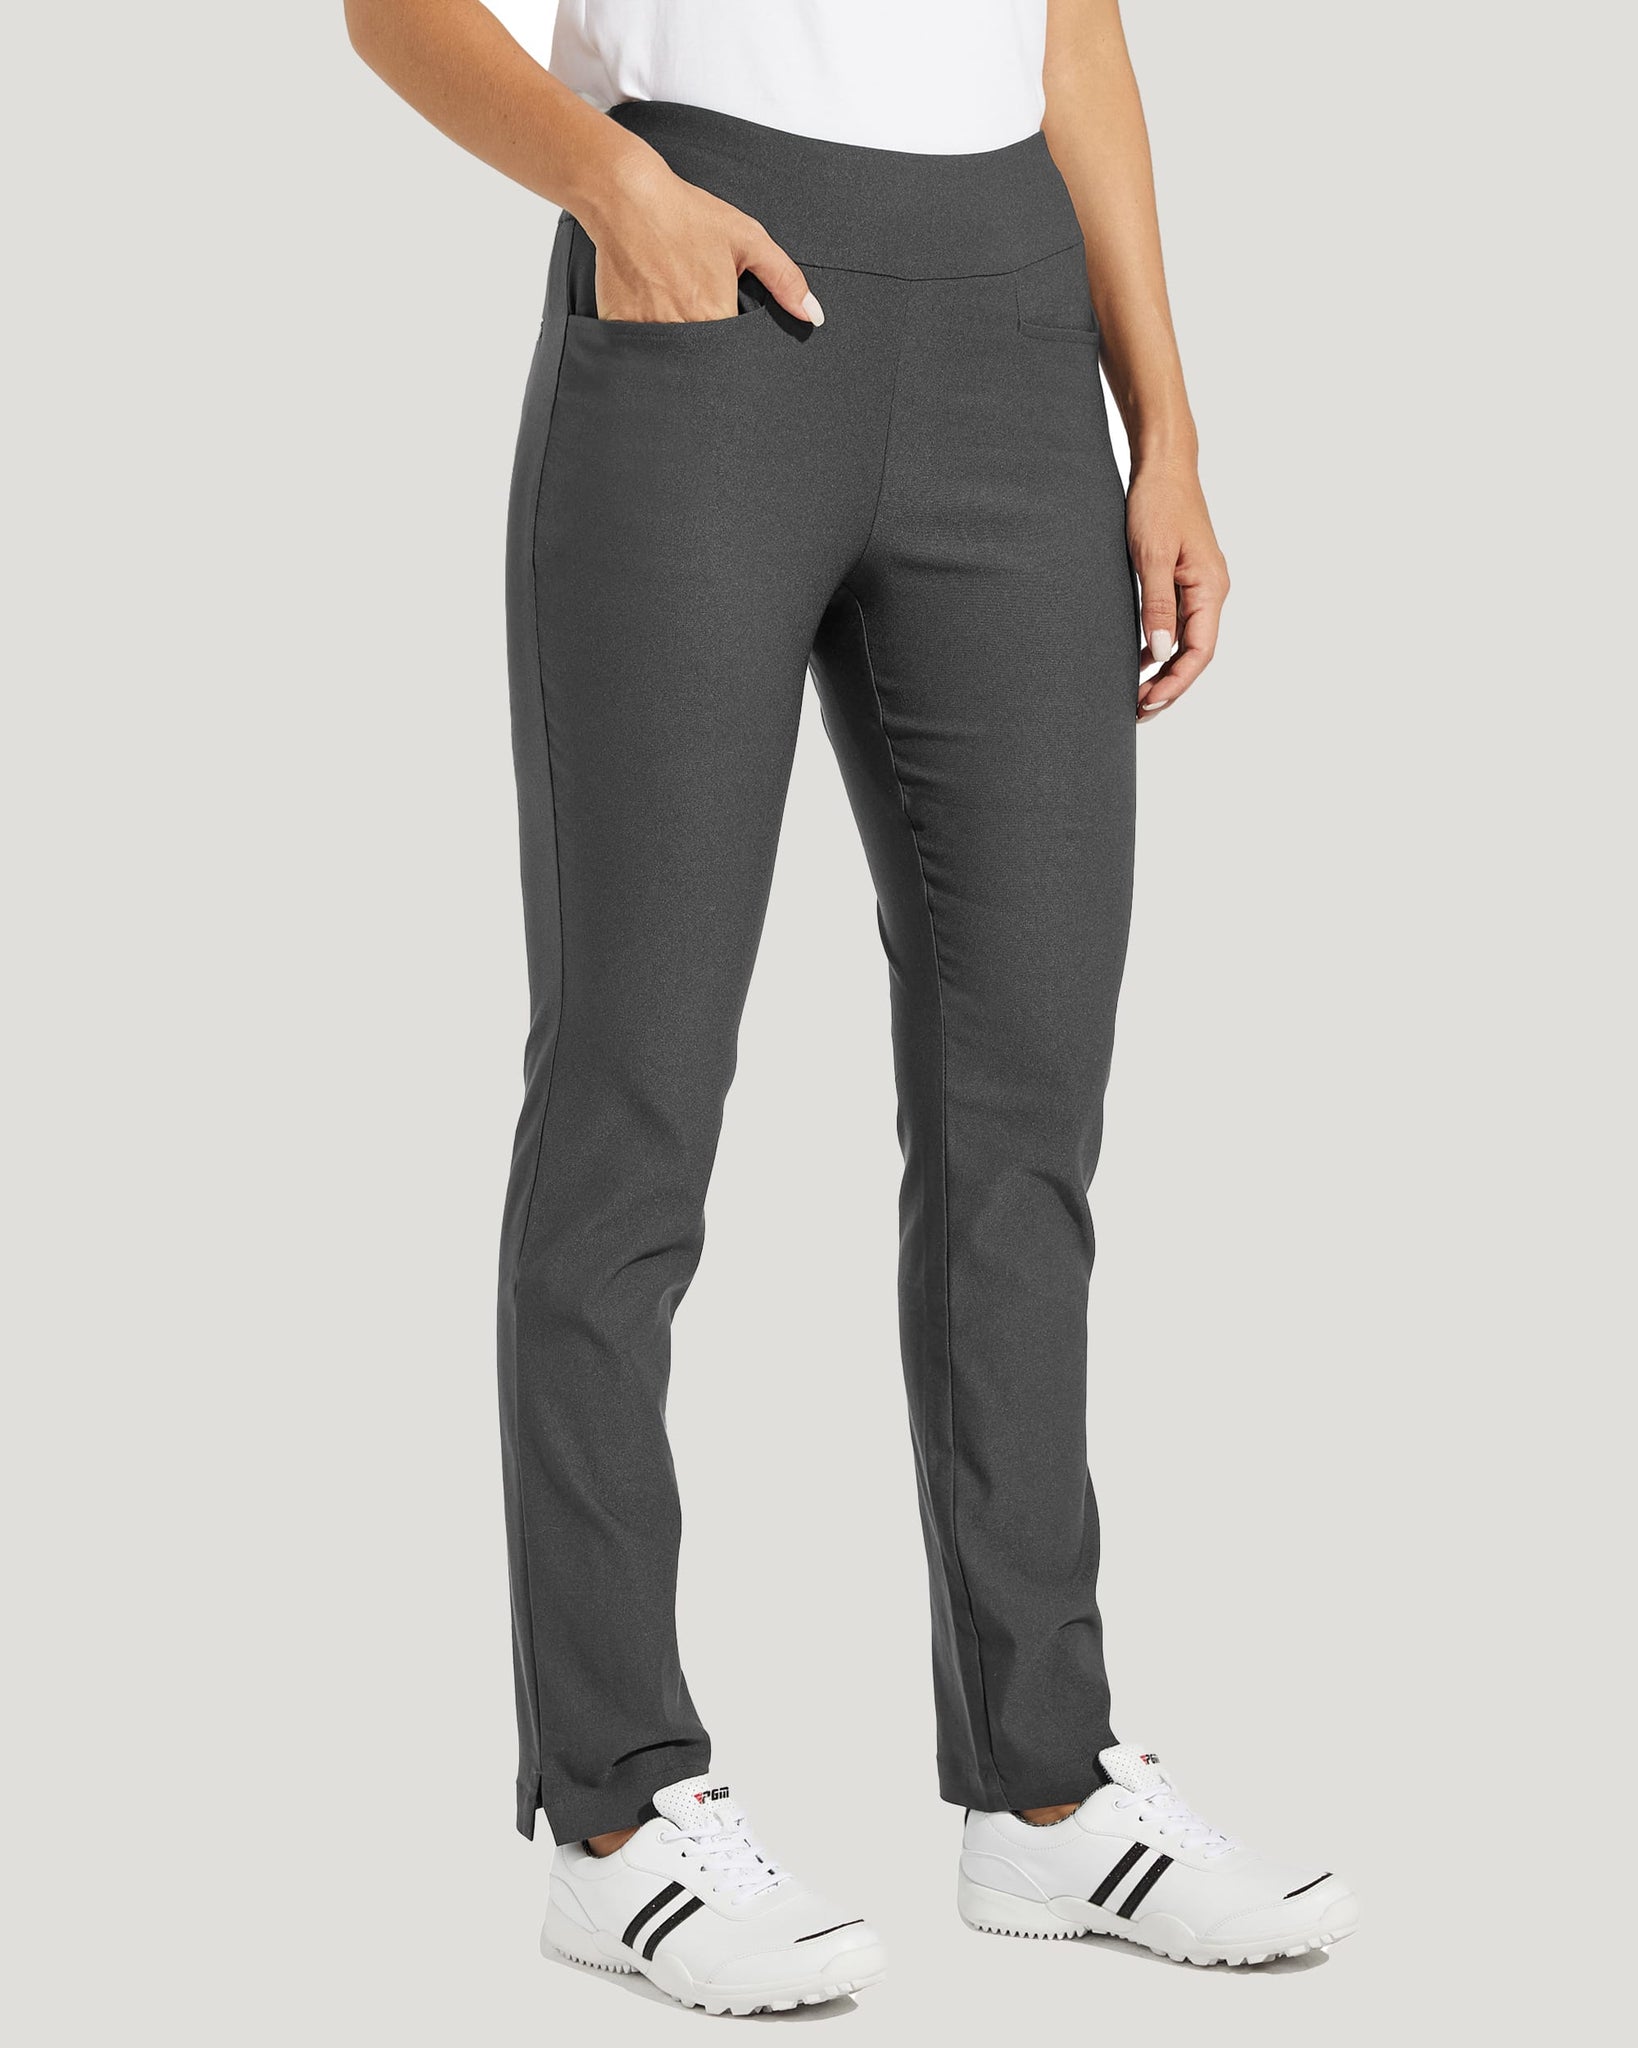 Women's Golf Pull-On Pants_DeepGray_model2